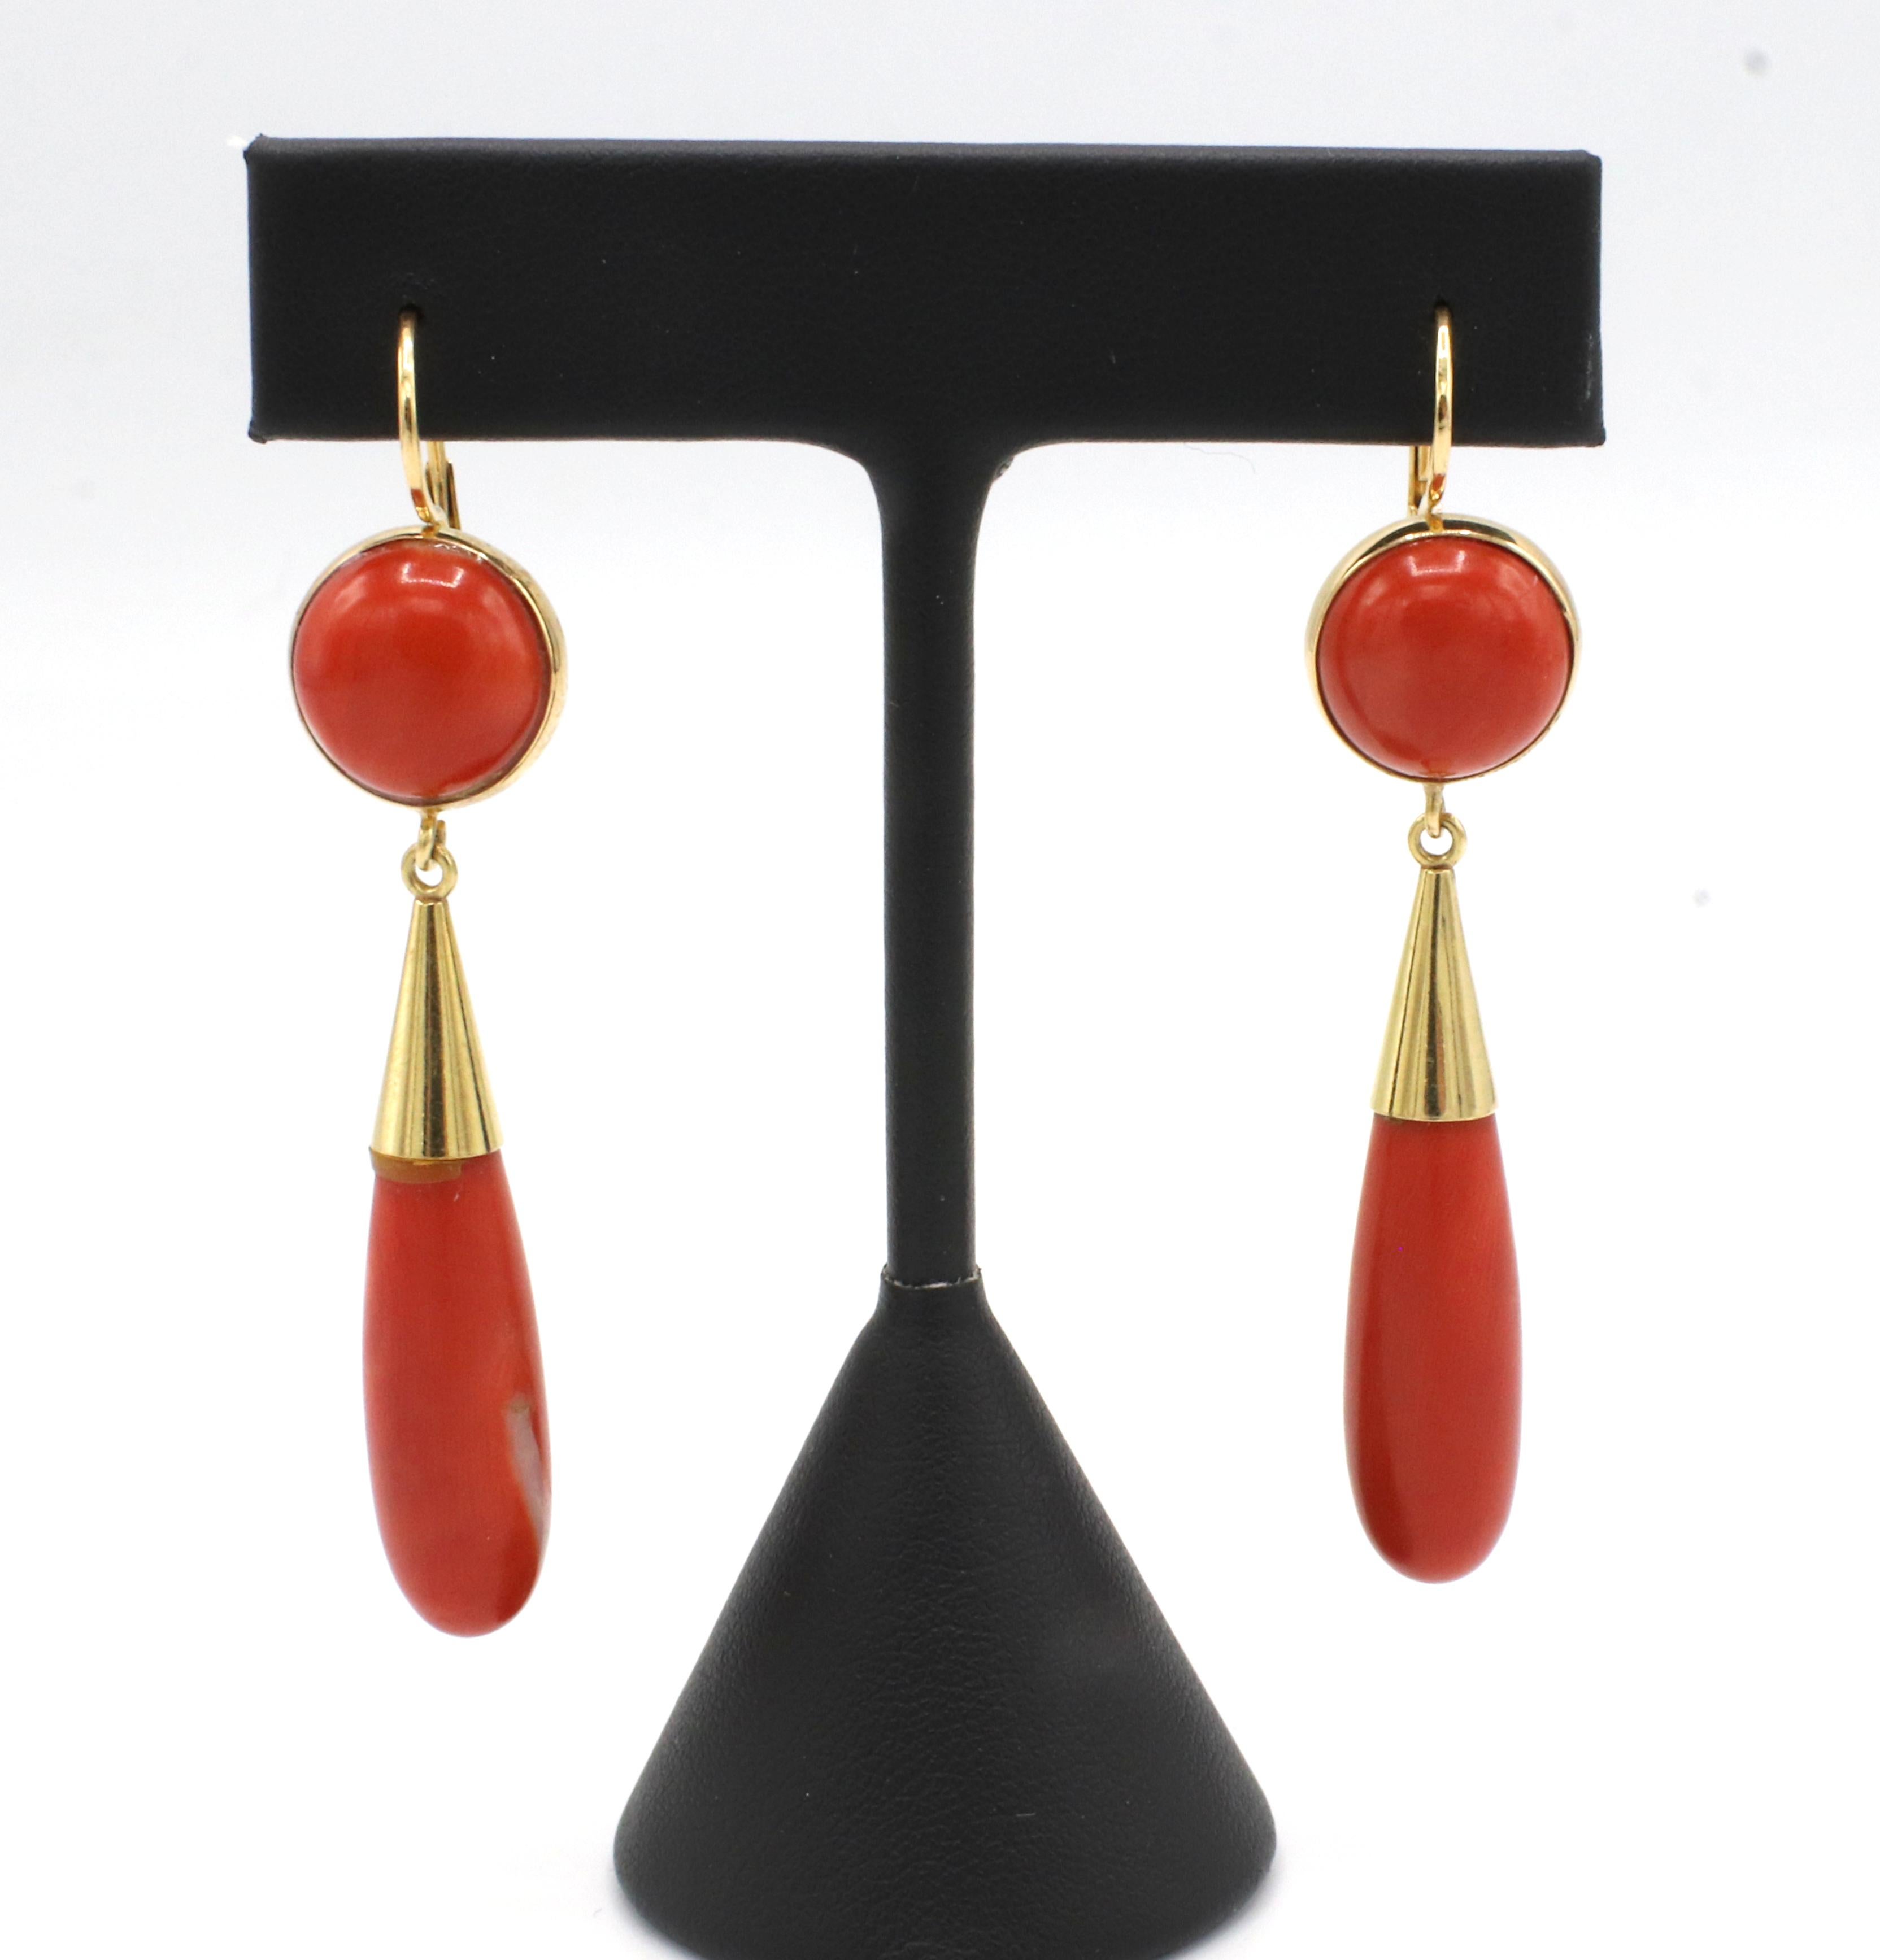 18 Karat Yellow Gold Red Coral Dangle Drop Earrings 
Metal: 18 karat yellow gold 750
Weight: 17.3 grams
Length: 2.5 inches
